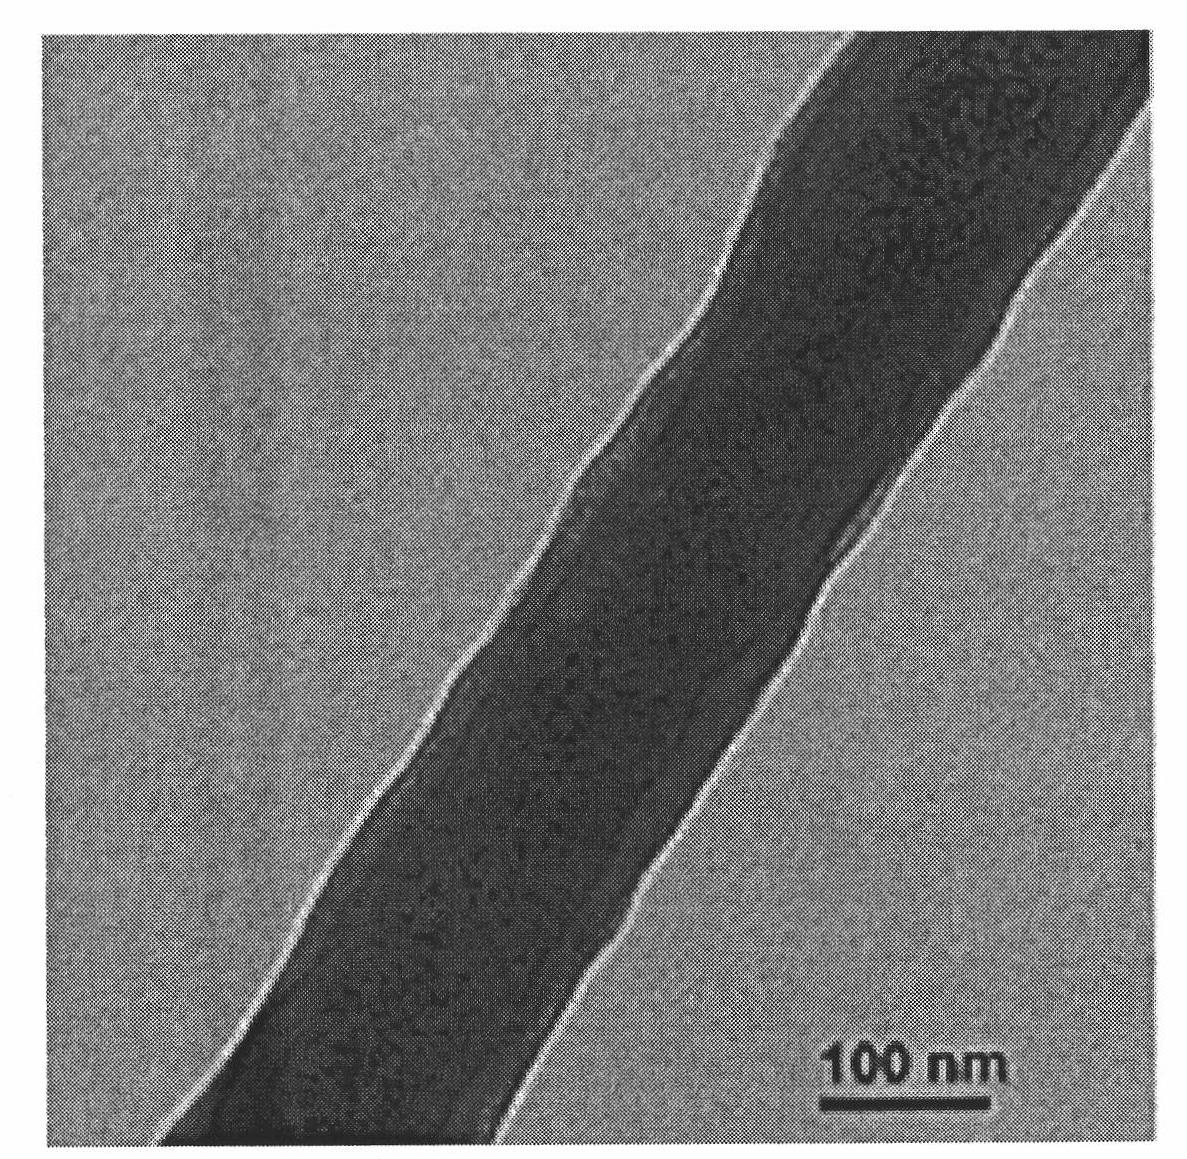 Coaxial polyphosphazene nanofiber composite membrane and preparation method thereof